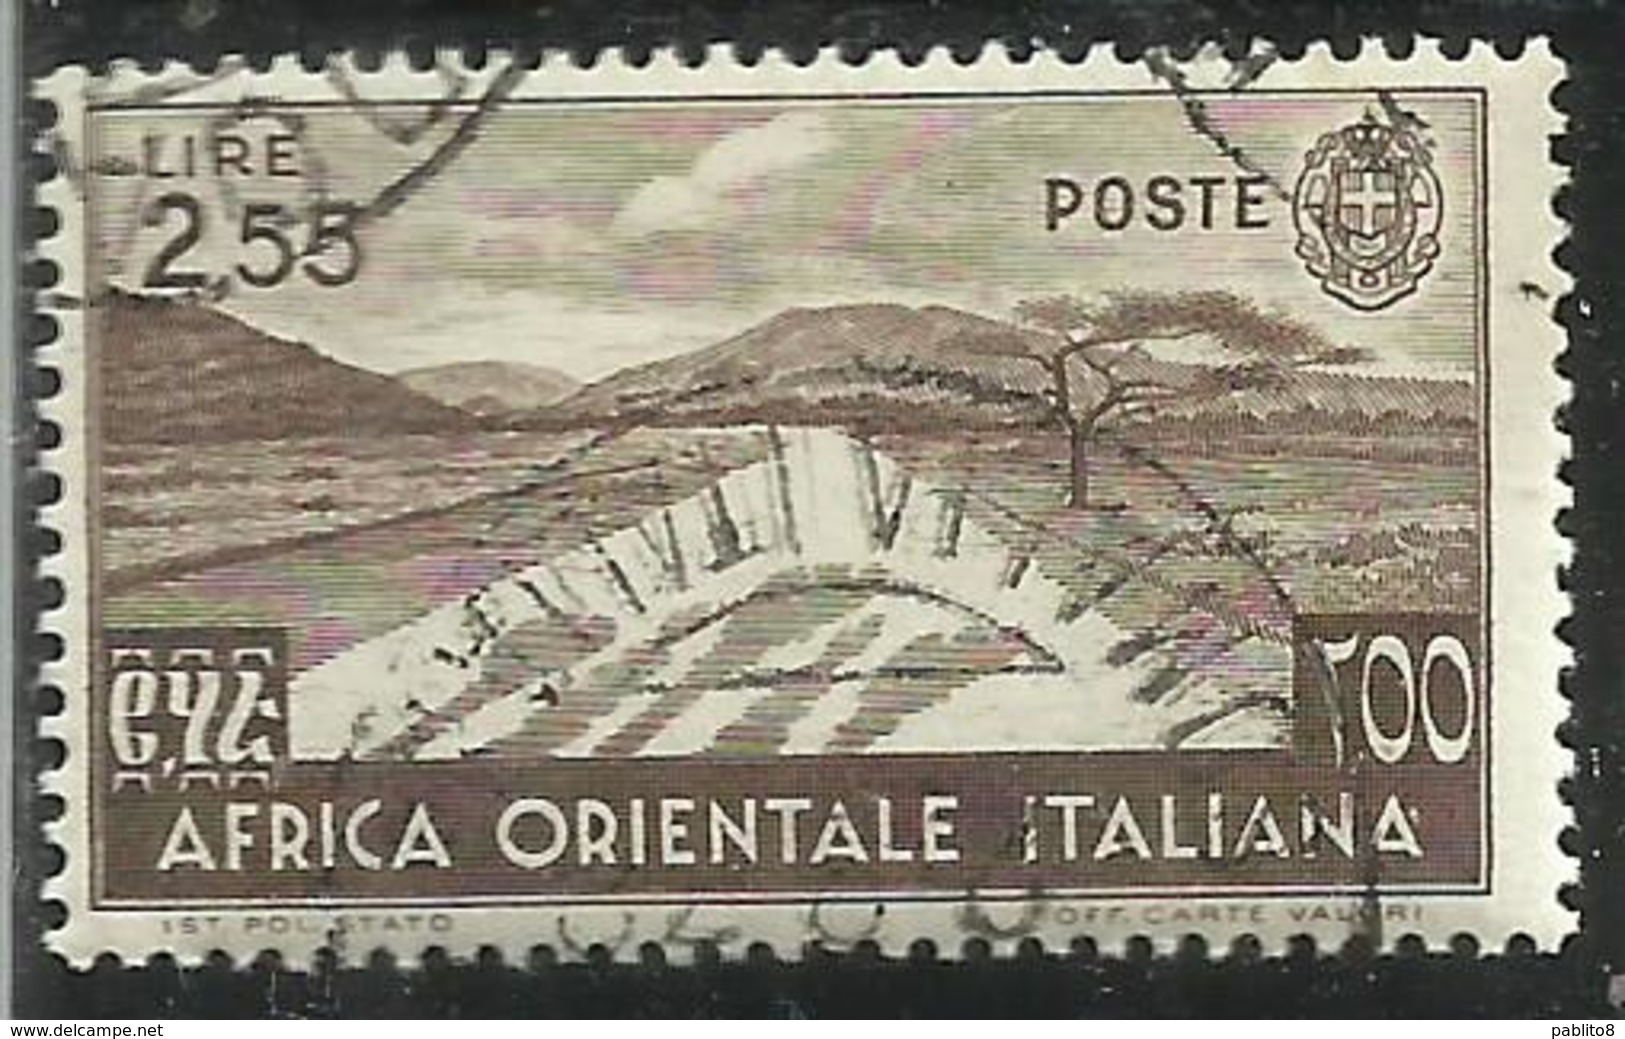 AFRICA ORIENTALE ITALIANA EASTERN ITALIAN AOI 1938 SOGGETTI VARI LIRE 2,55 USATO USED OBLITERE´ - Italian Eastern Africa